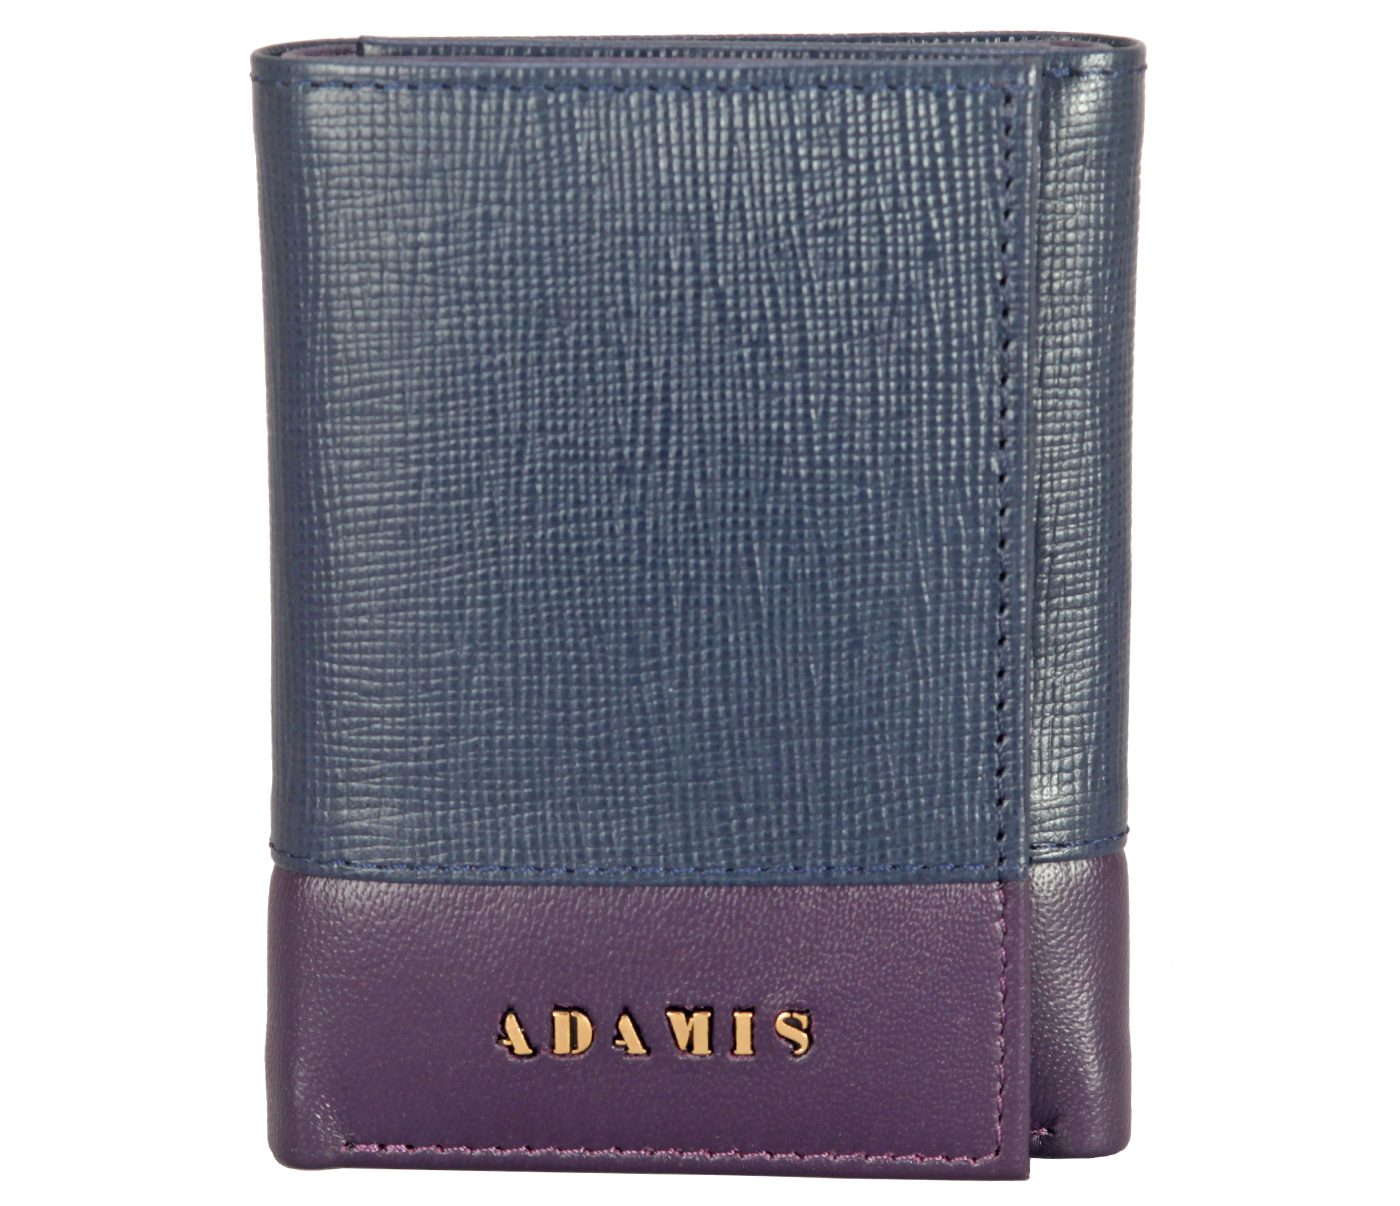 Wallet-Bradley-Men's trifold wallet with photo id in Genuine Leather - BLUE/PURPLE